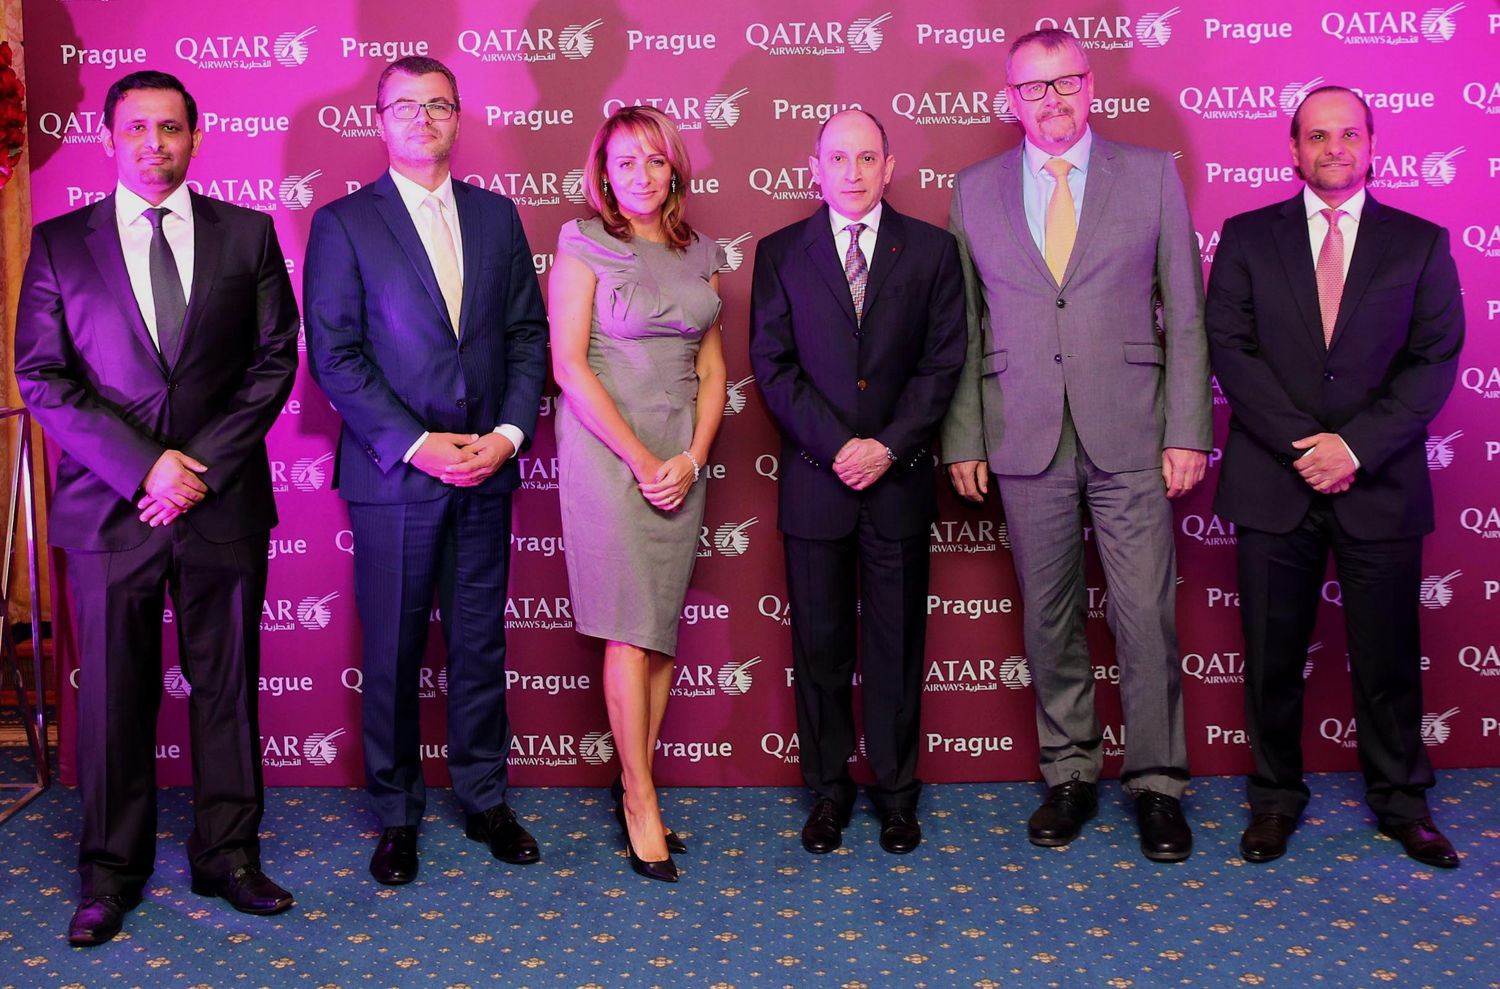 Šejk Falleh Nasser Al Thani, Václav Řehoř, Adriana Krnáčová, Akbar al-Bákir (generální ředitel Qatar Airways), Dan Ťok, šejk Saoud bin Abdulrahman Al Thani (katarský ambasador v Německu)